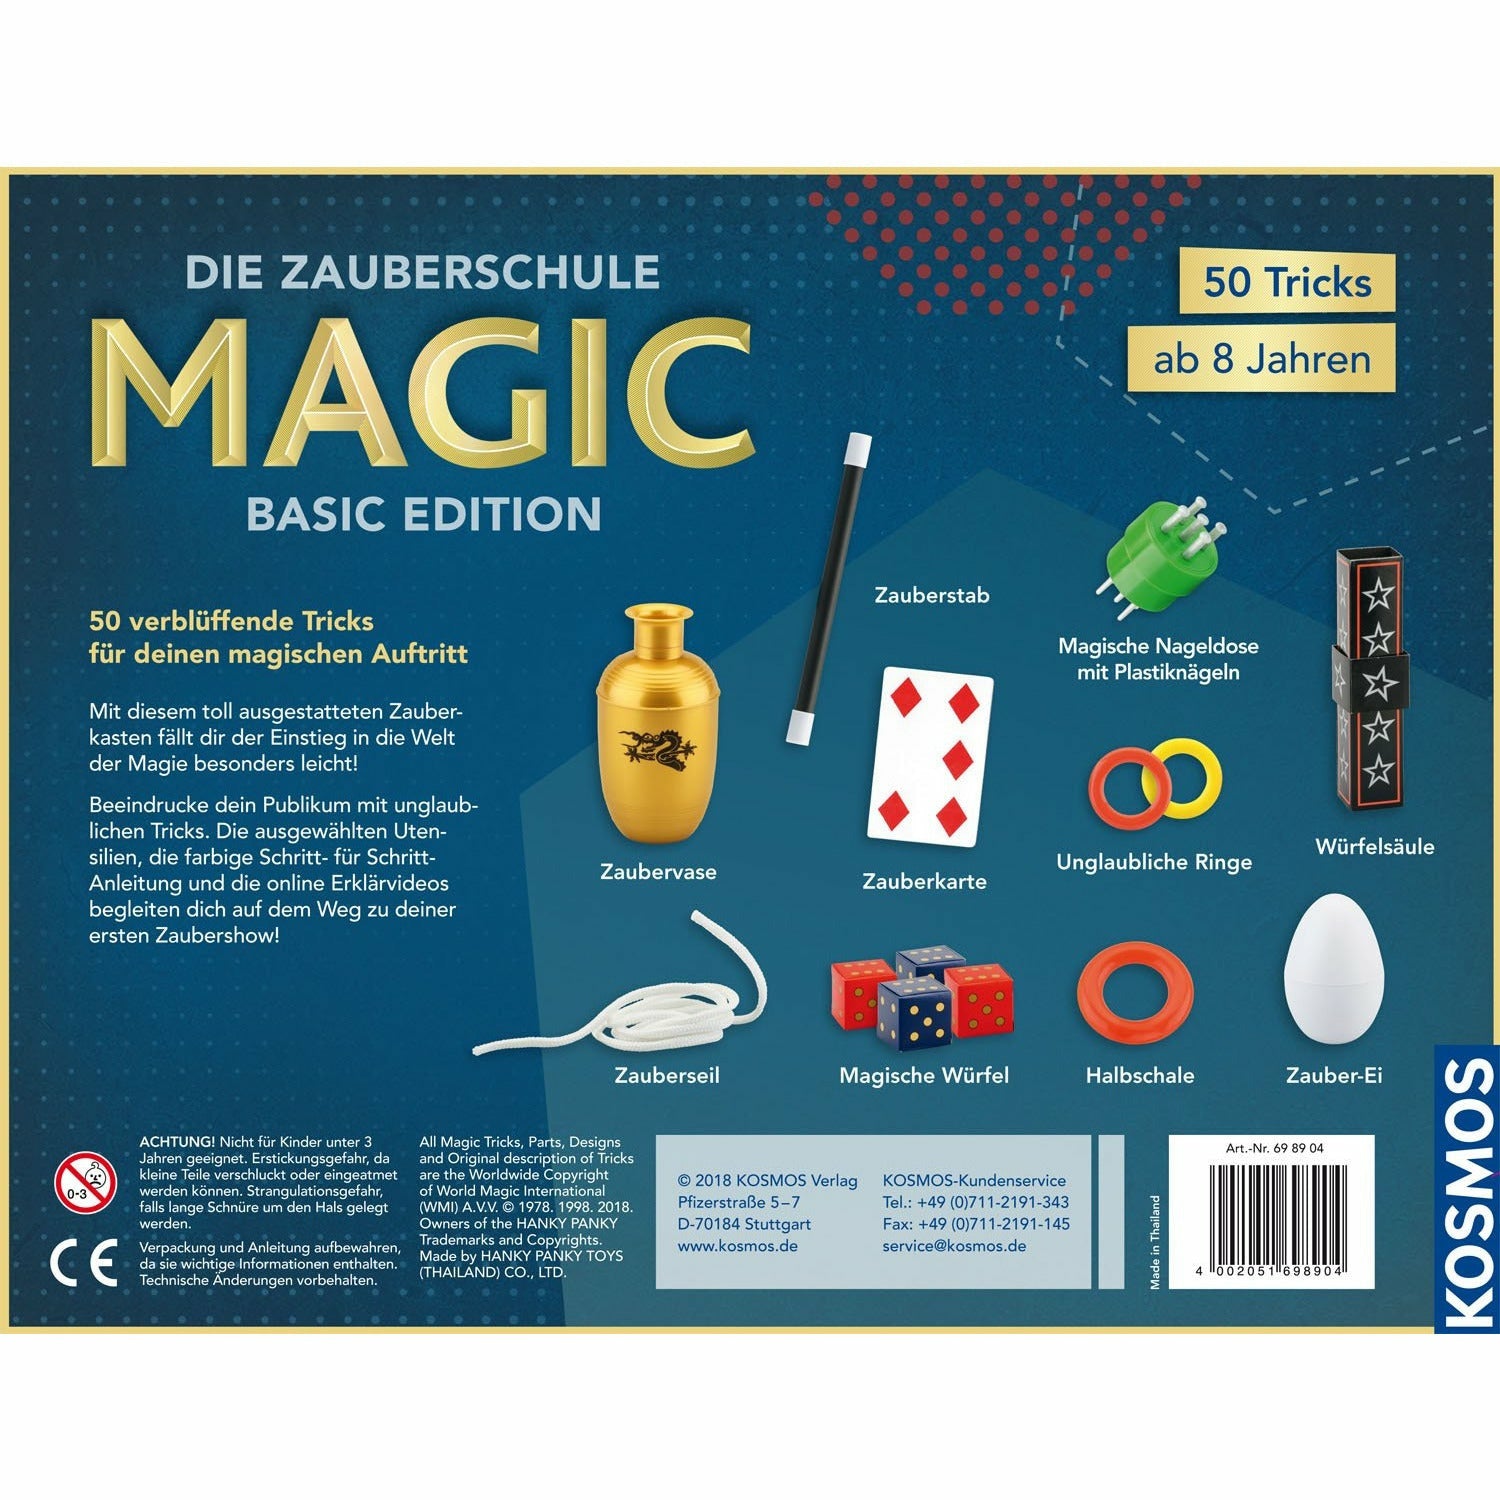 Die Zauberschule Magic - Basic Edition